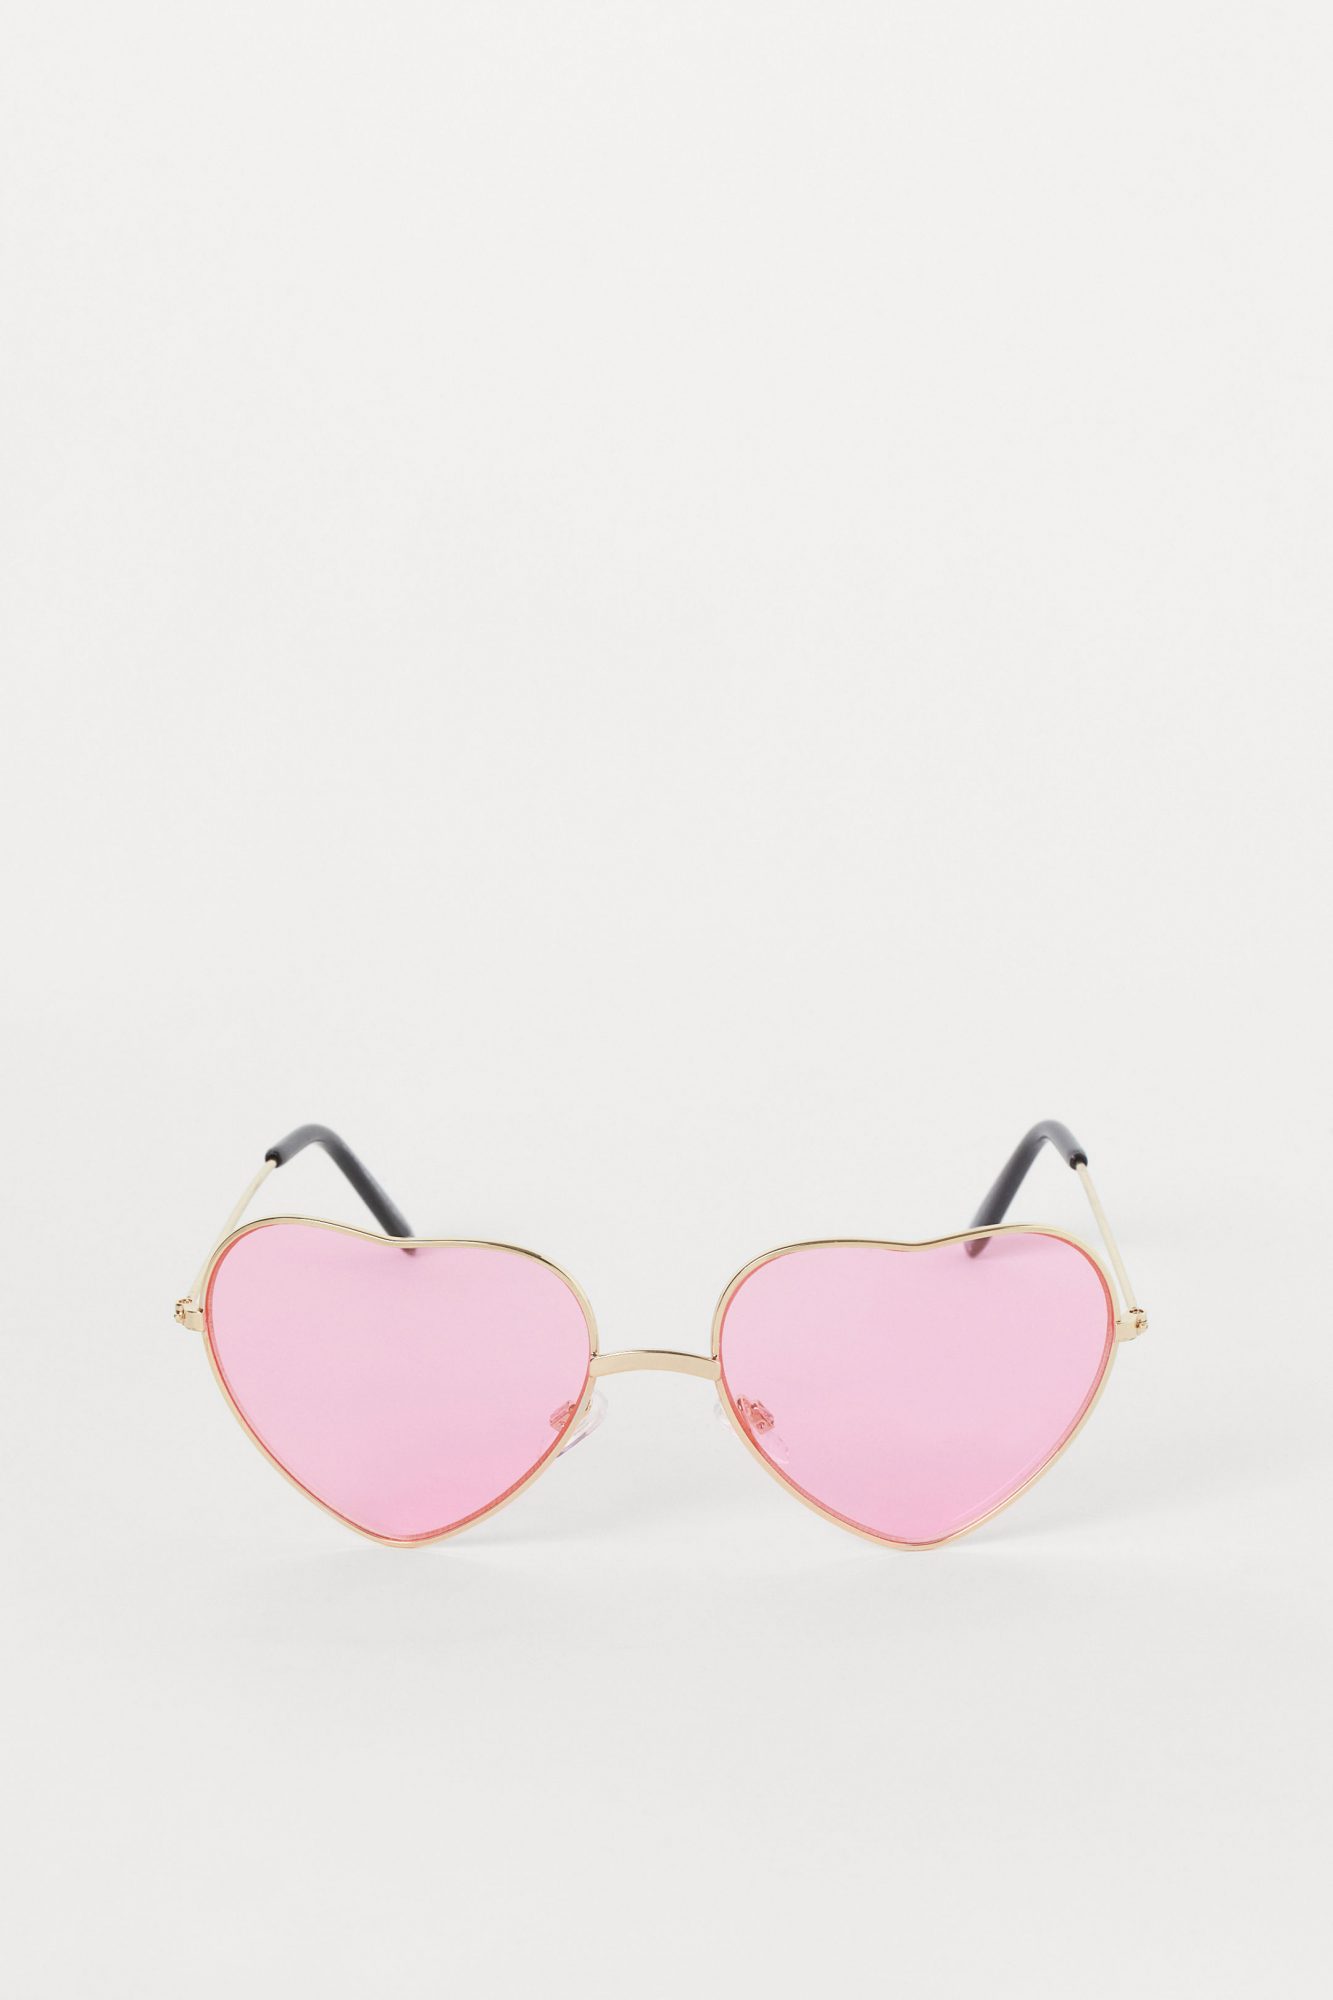 H&M heart-shaped sunglasses